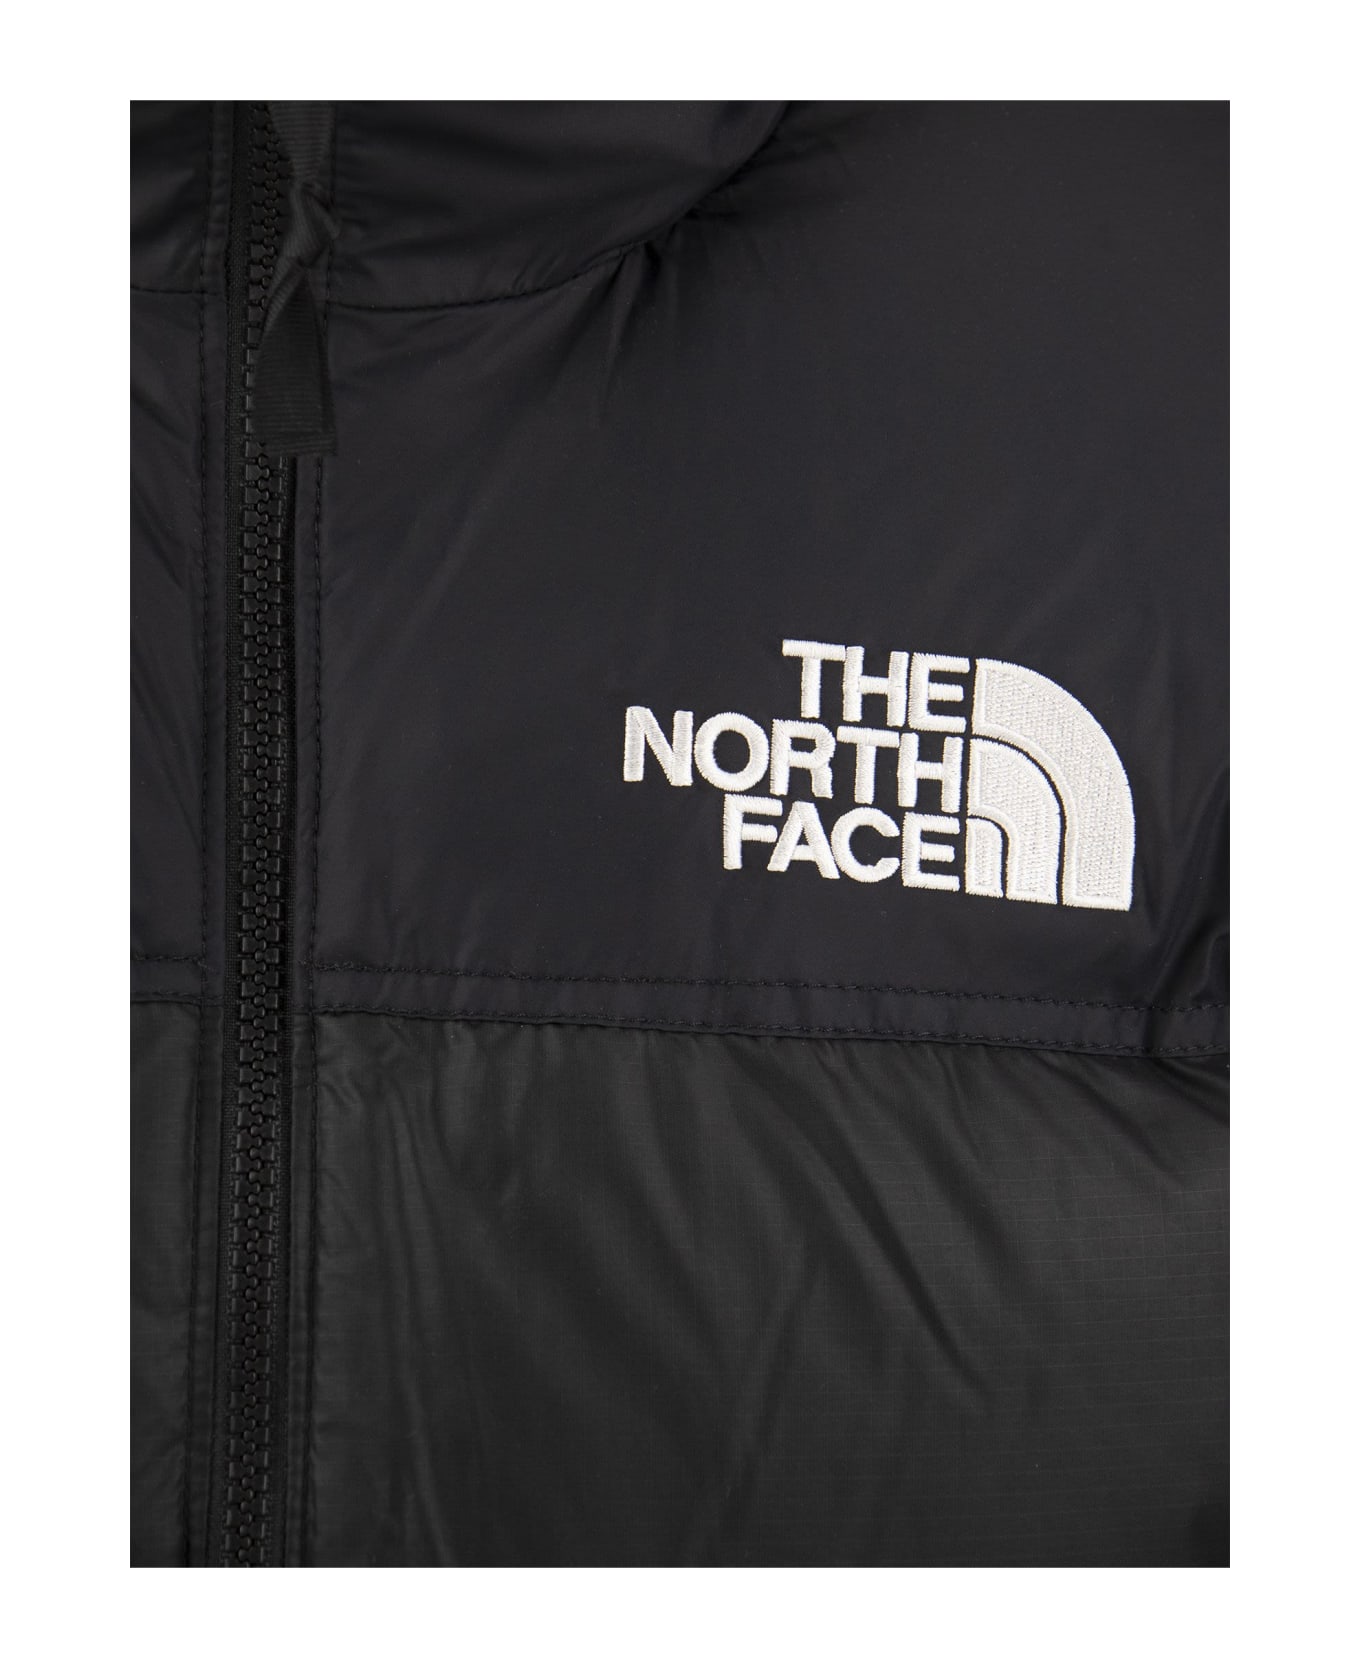 The North Face 1996 Retro Nuptse - Folding Jacket - Black